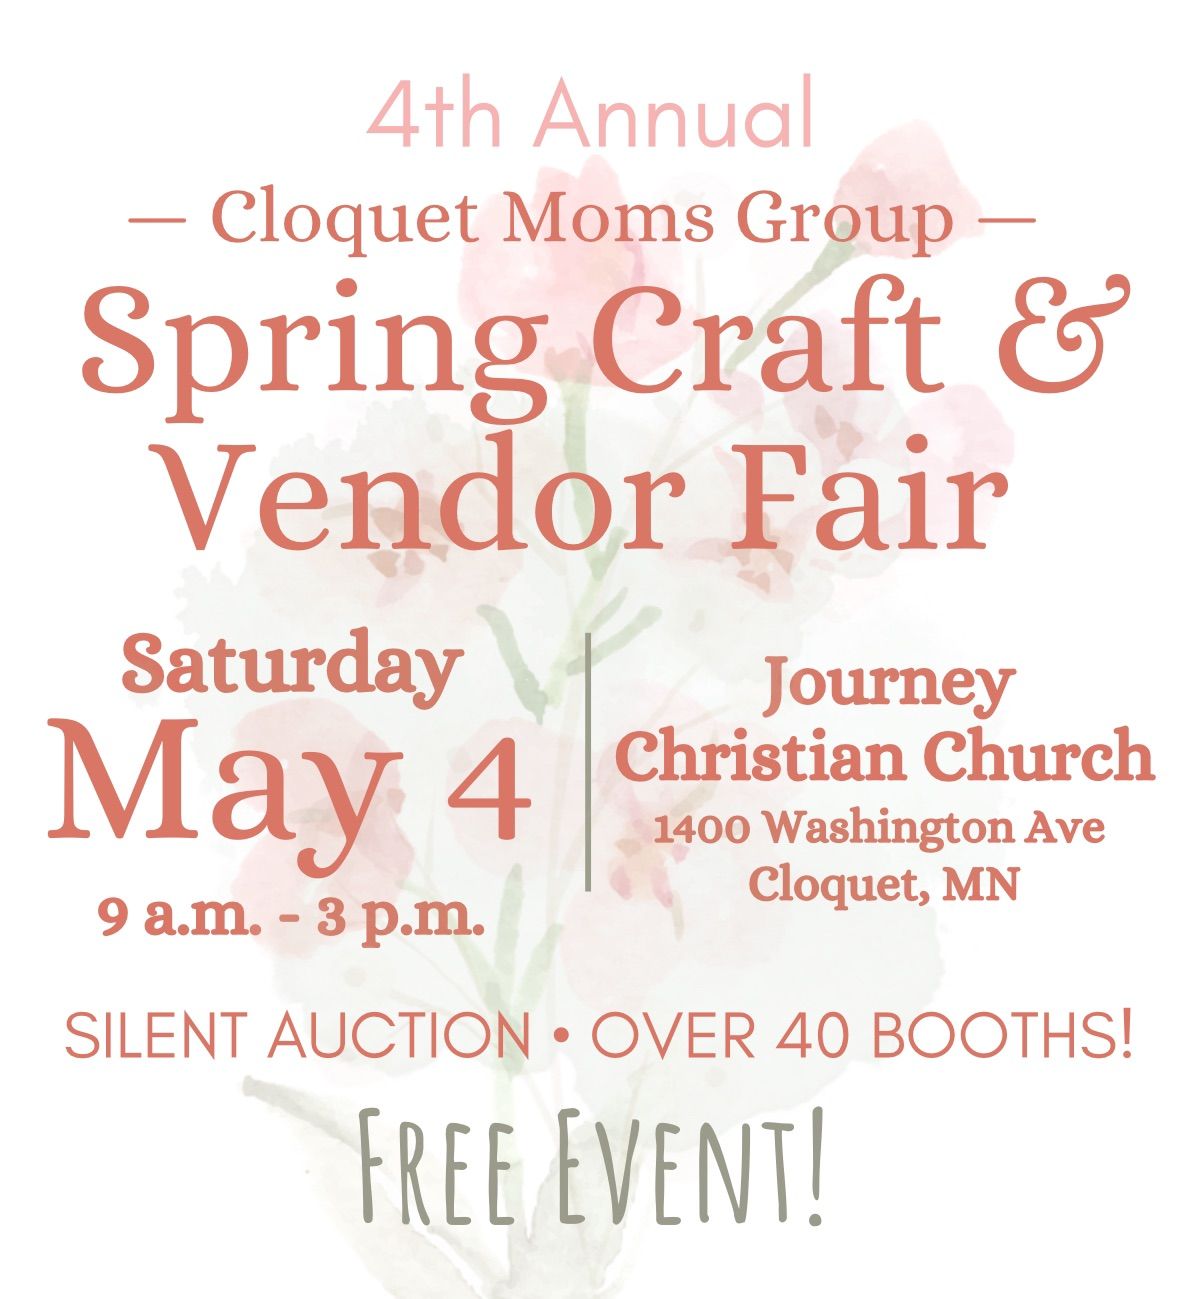 Cloquet Moms Group 4th Annual Spring Craft & Vendor Fair